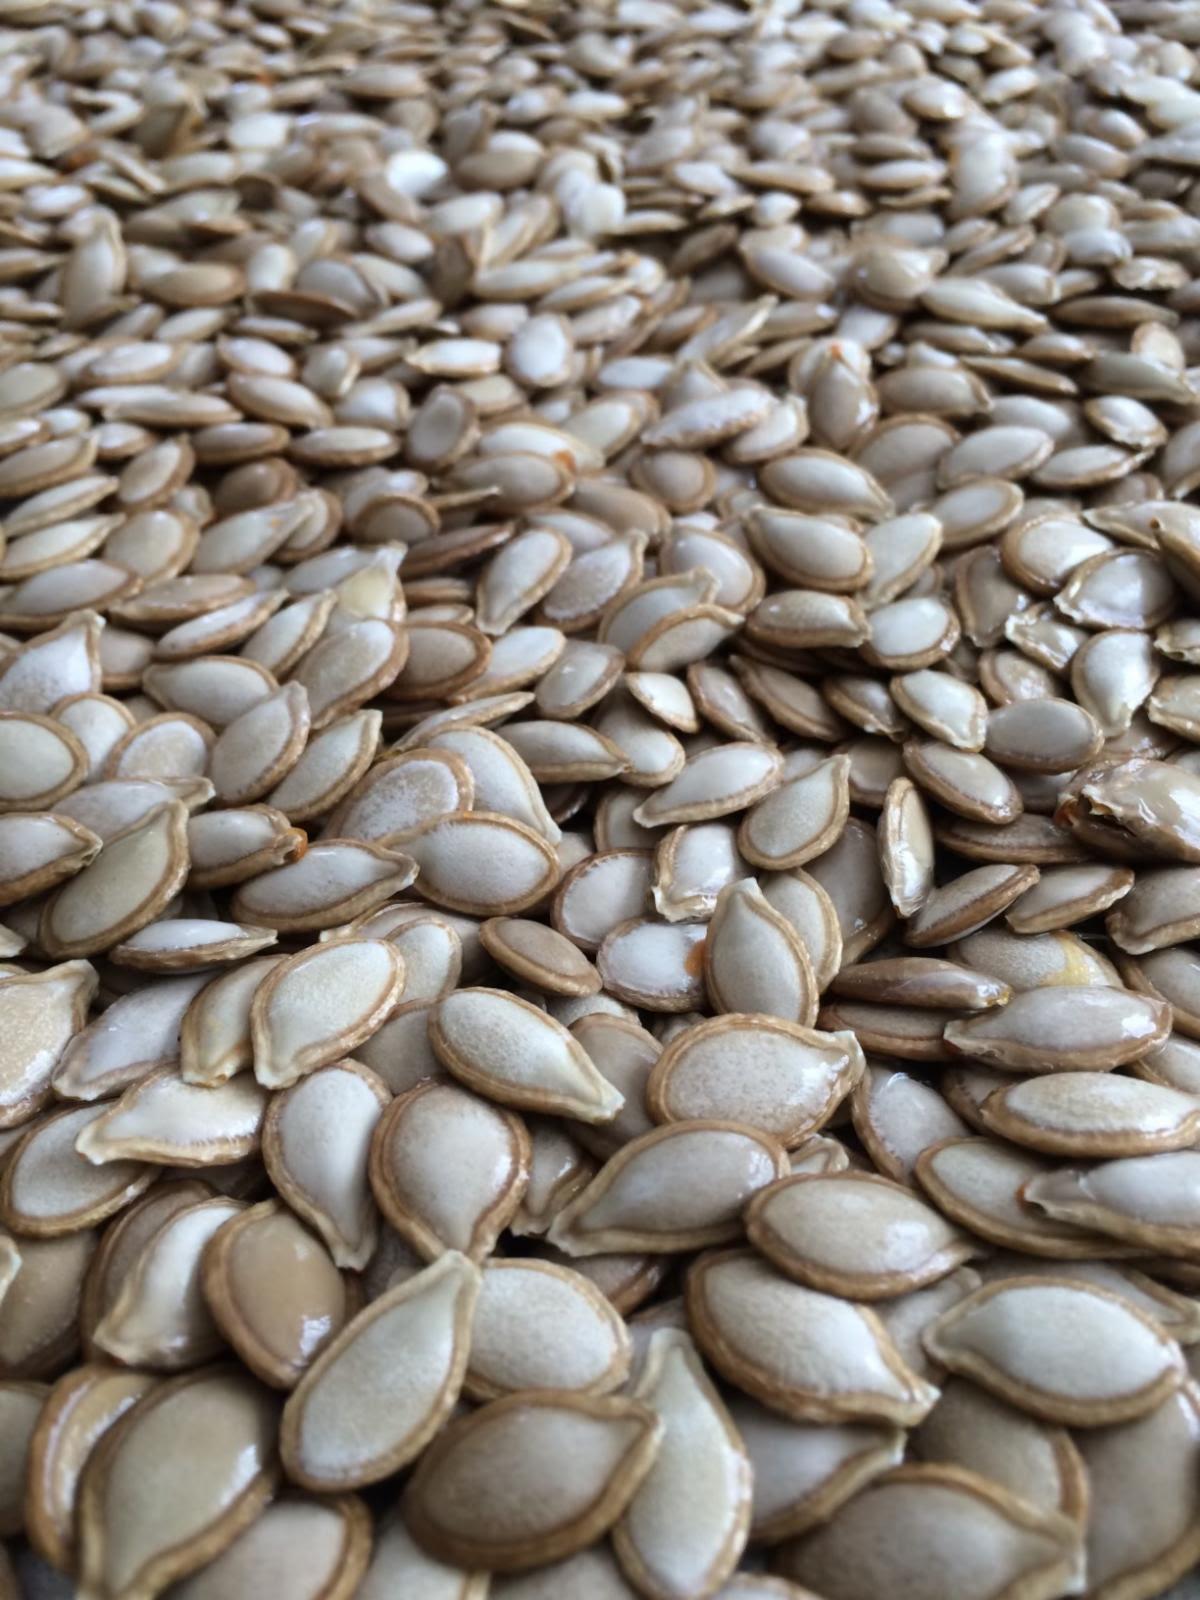 A color photo of pumpkin seeds.